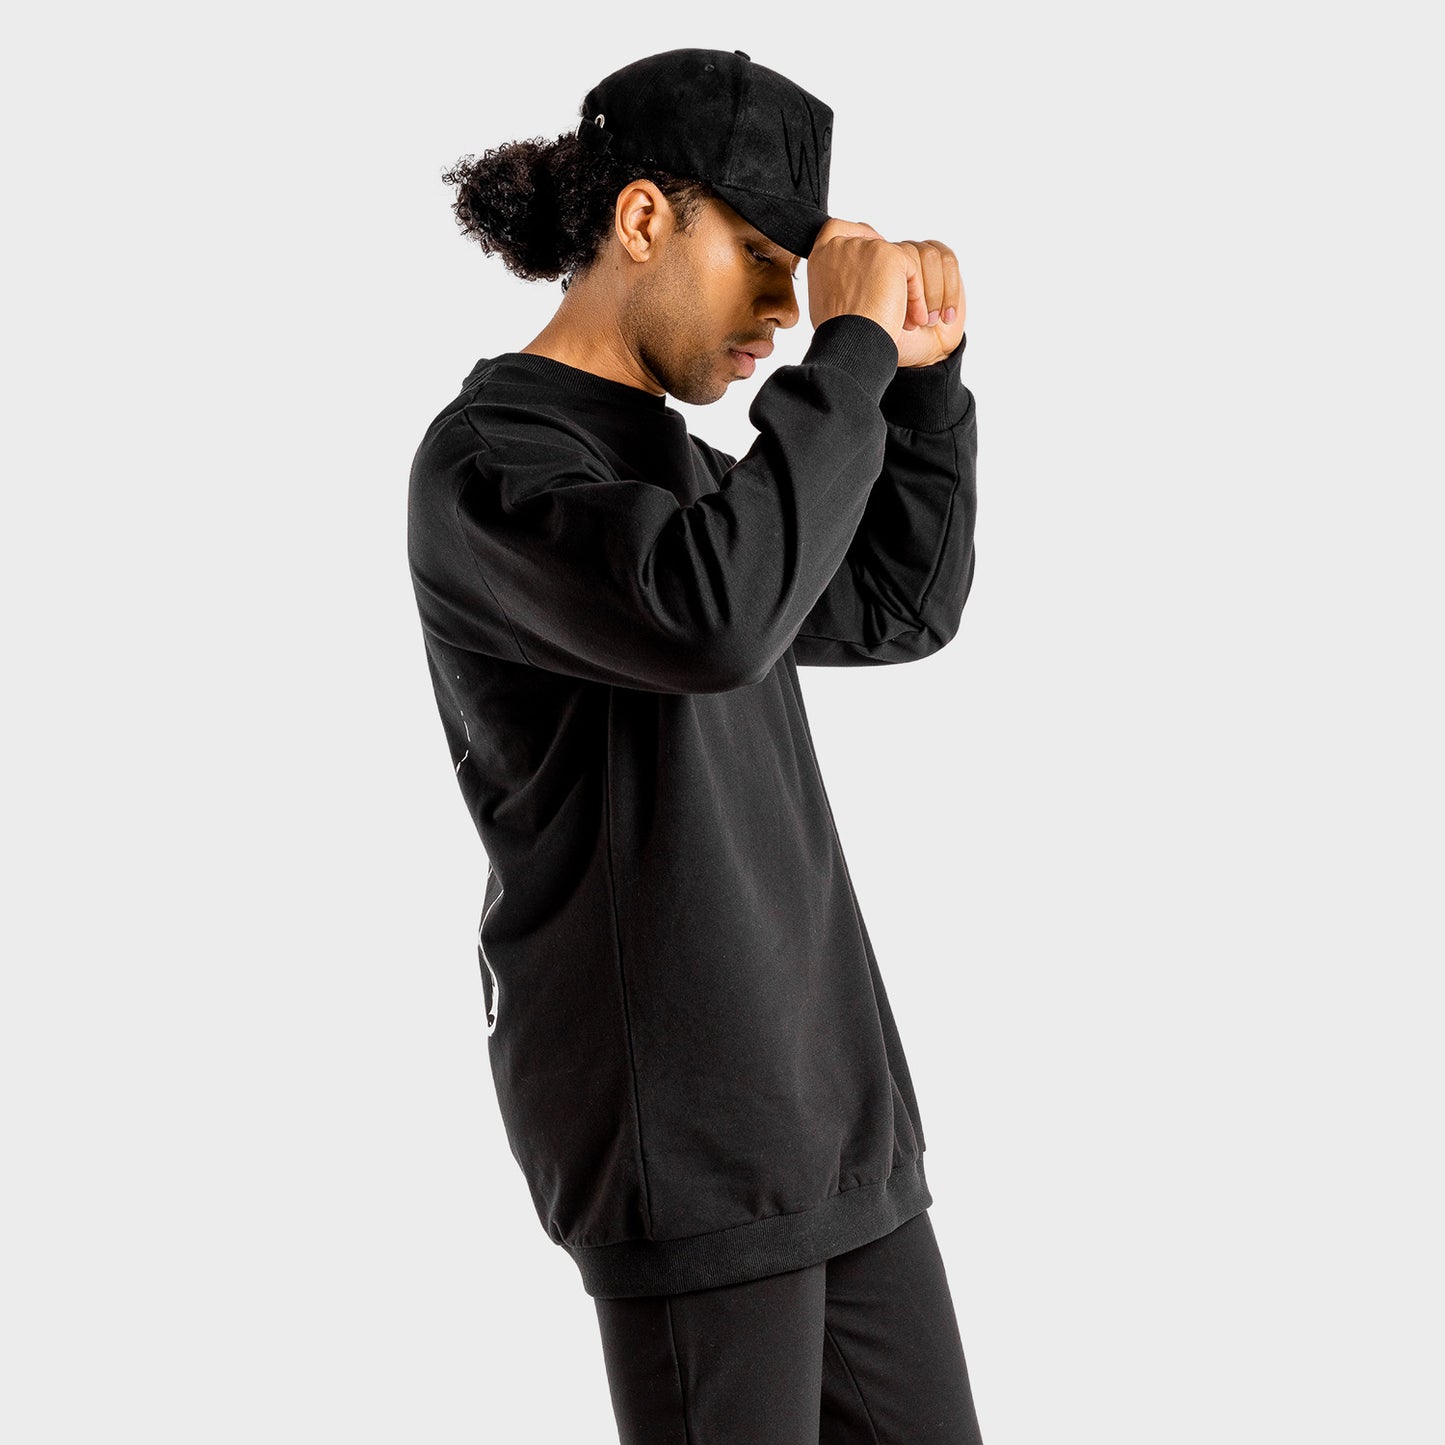 squatwolf-cap-for-men-rebel-cap-workout-black-gym-wear